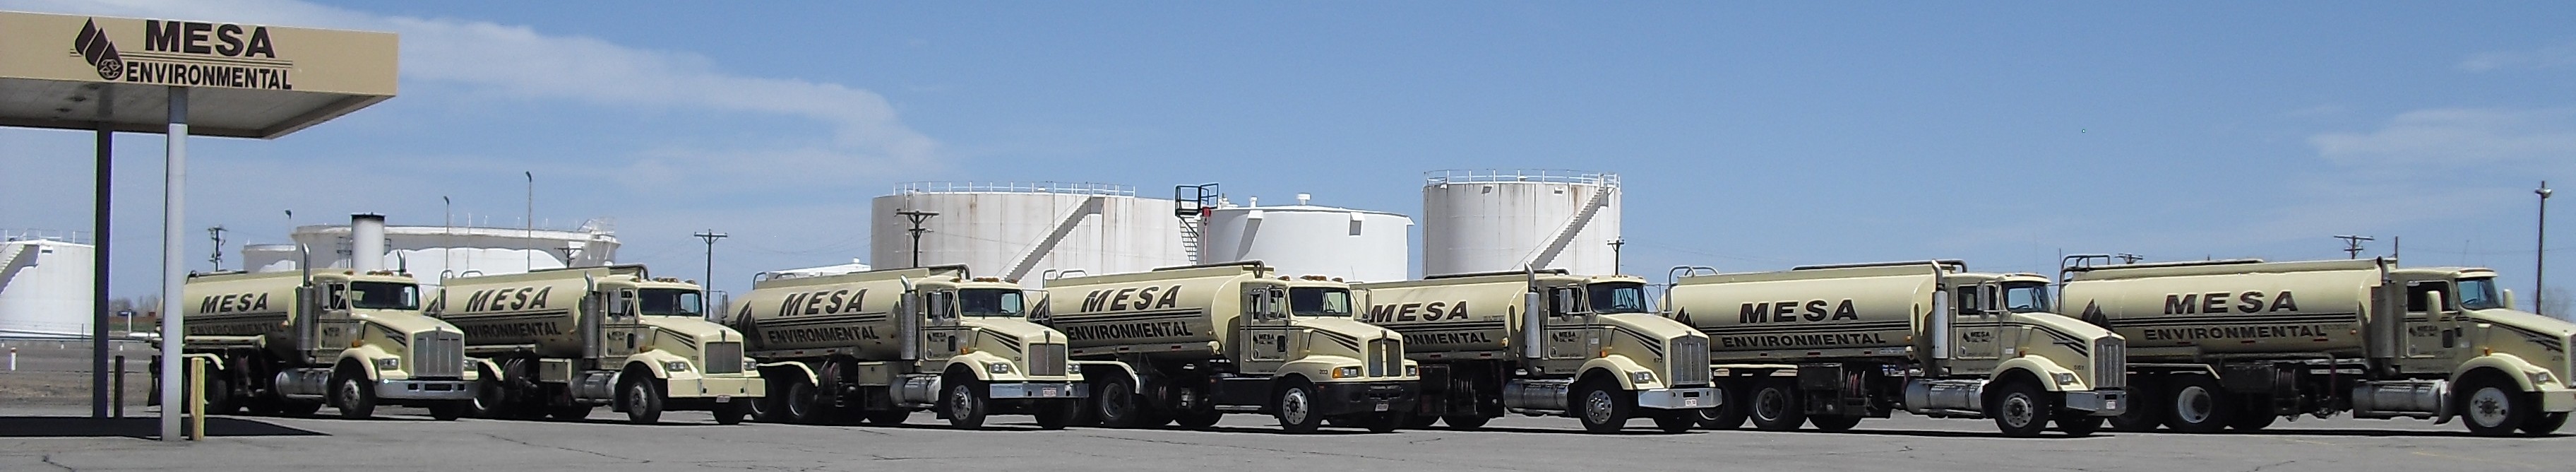 Mesa-Oil-Trucks (1)